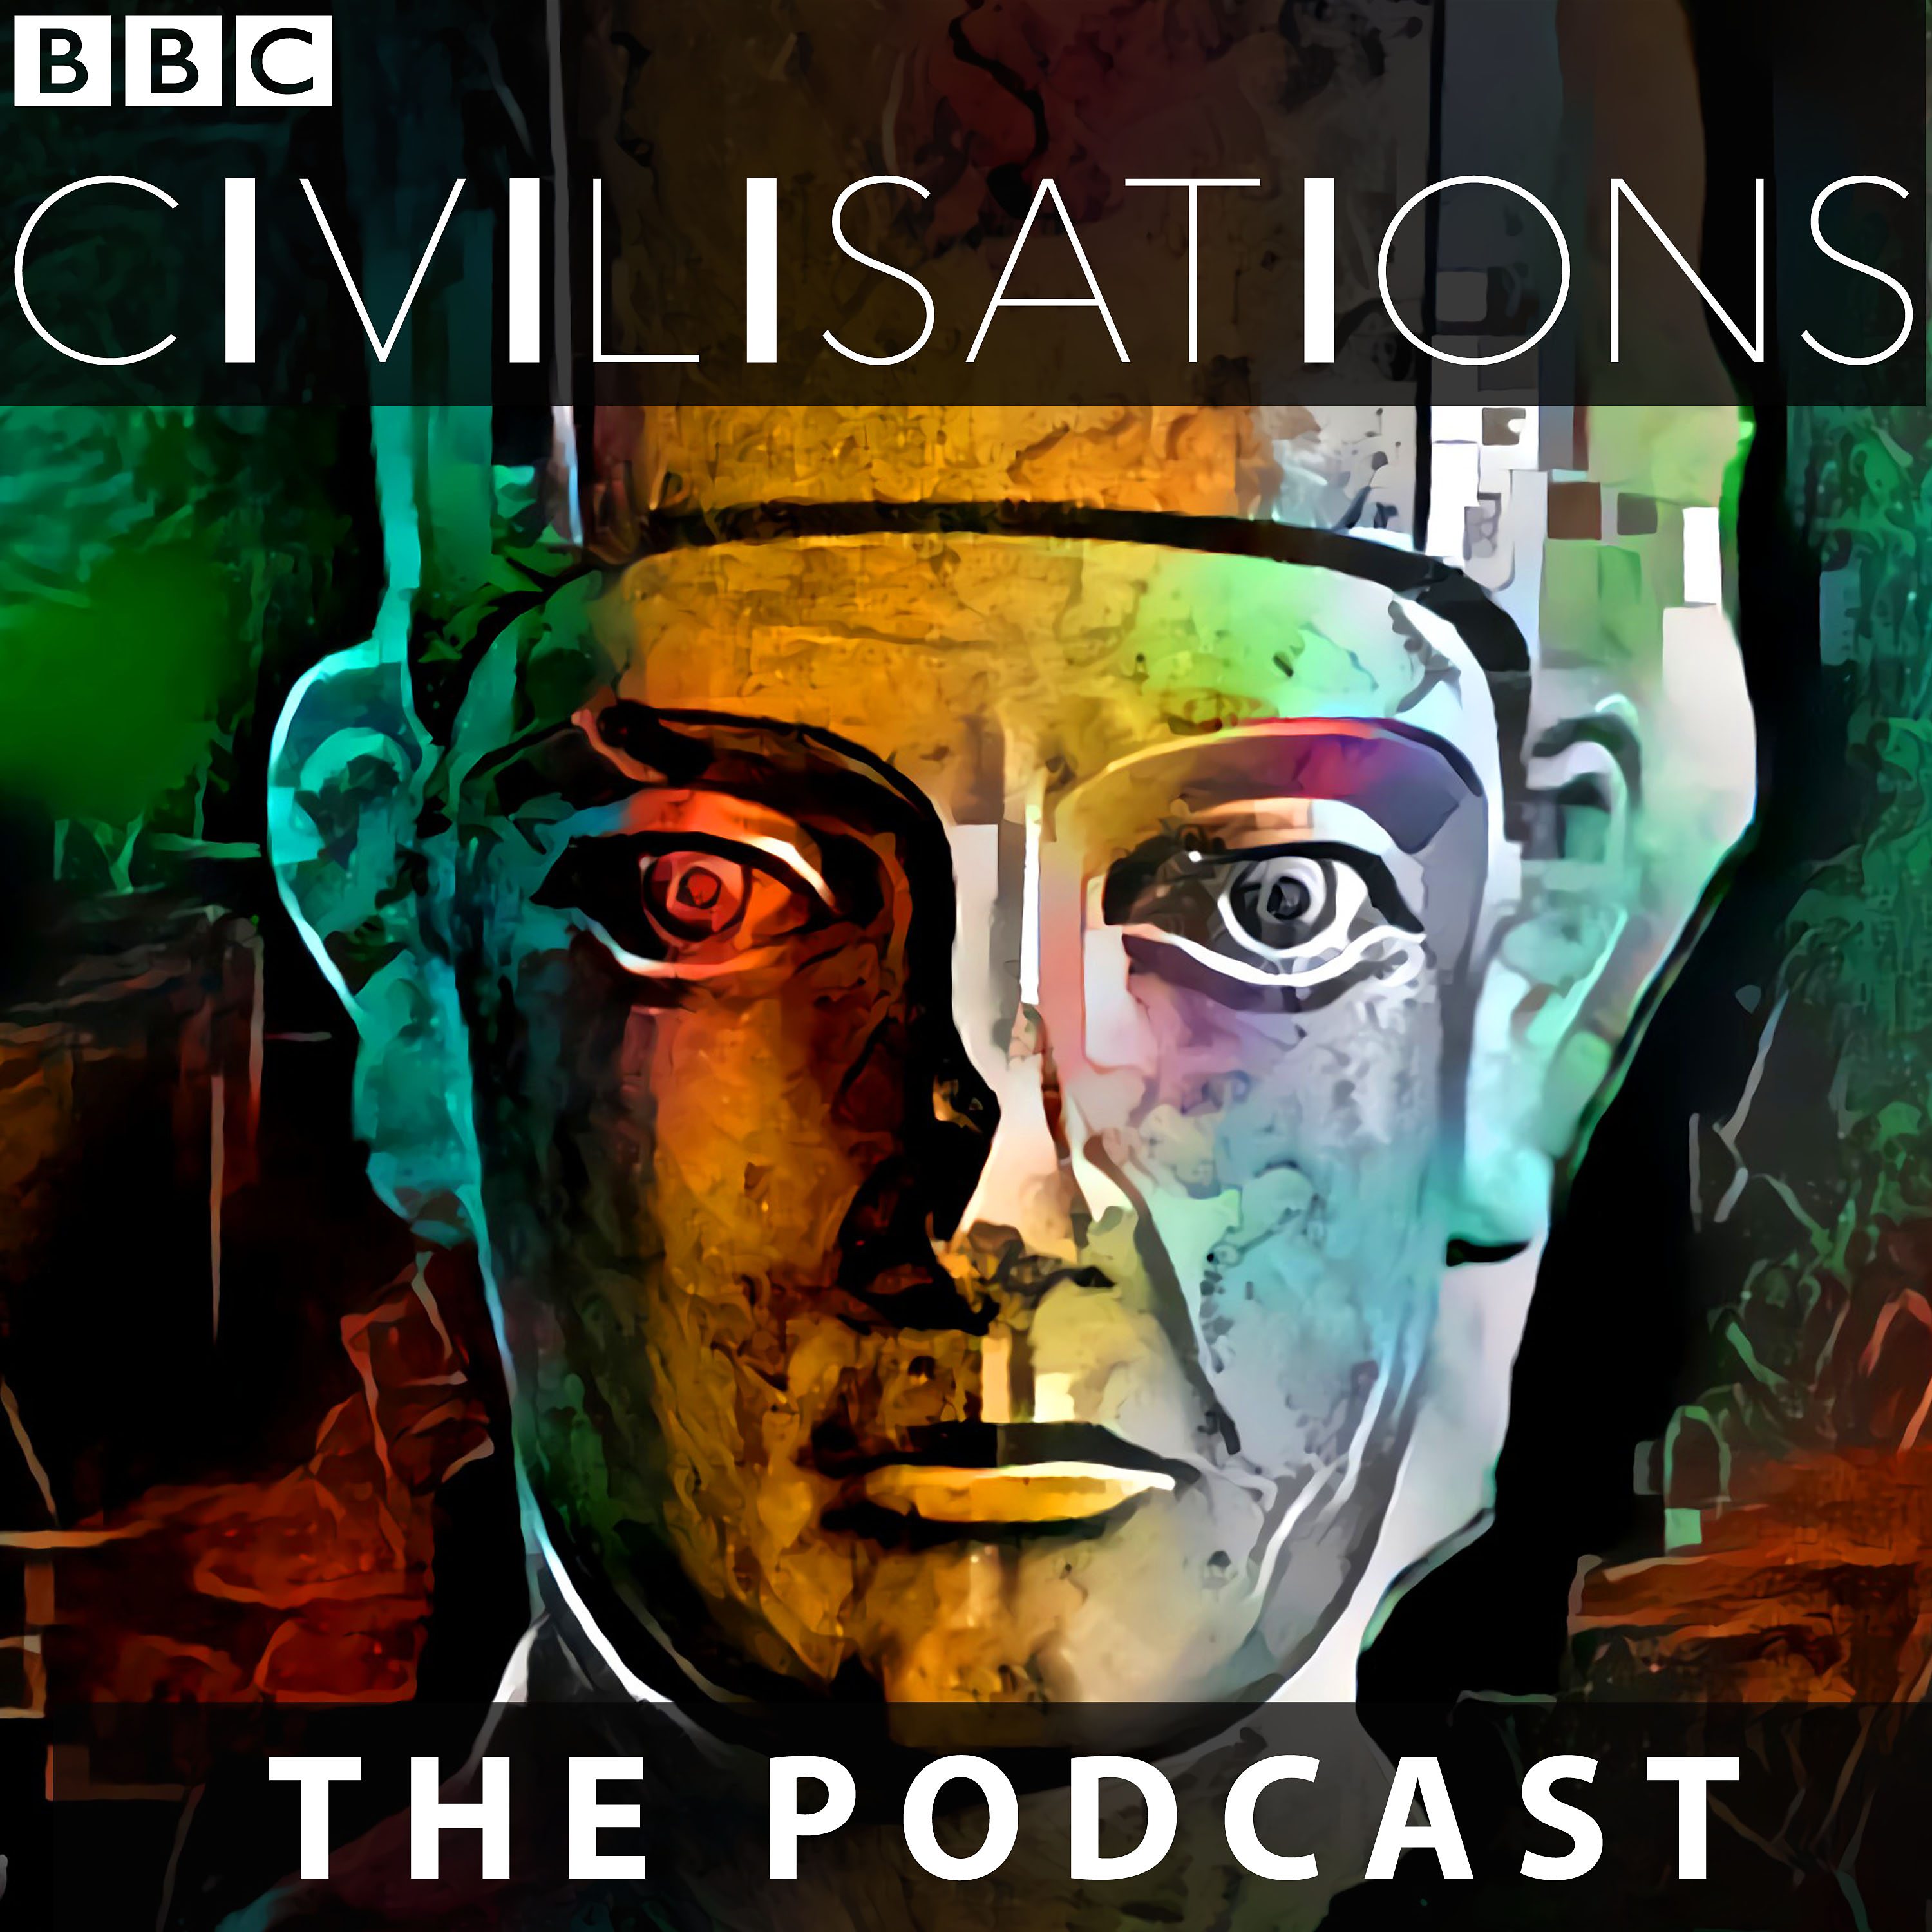 The Civilisations Podcast